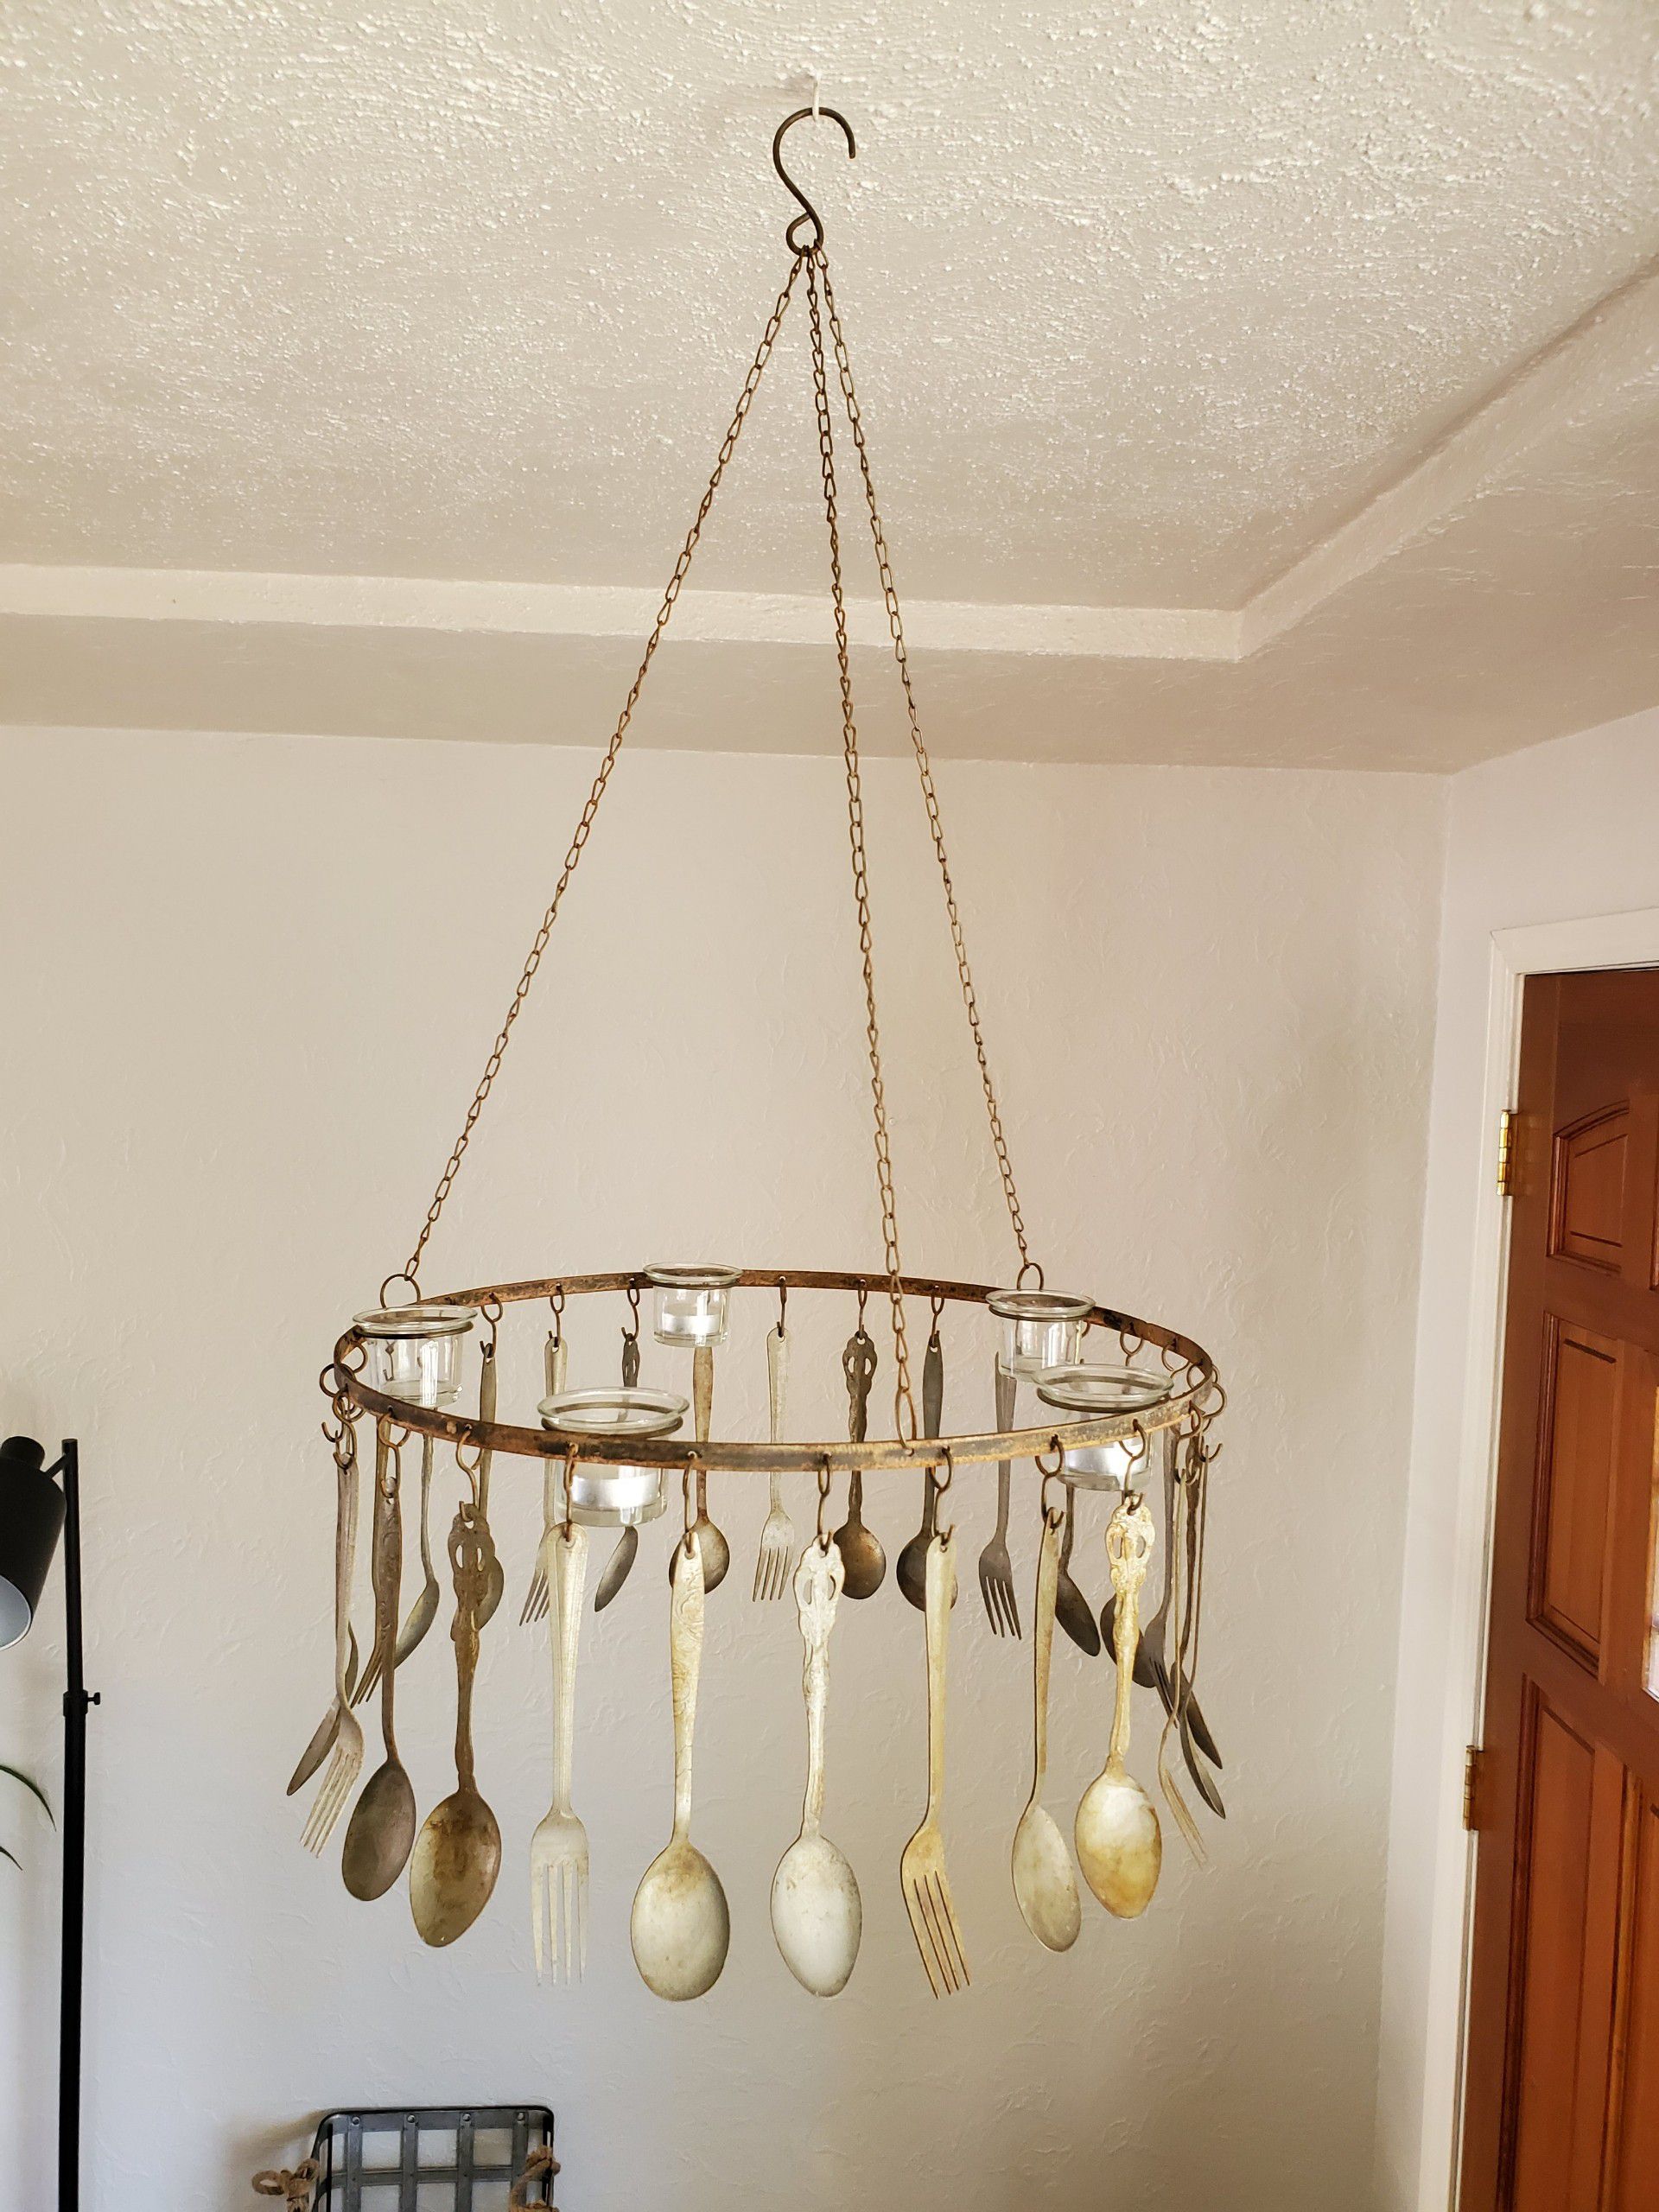 Farmhouse style chandelier